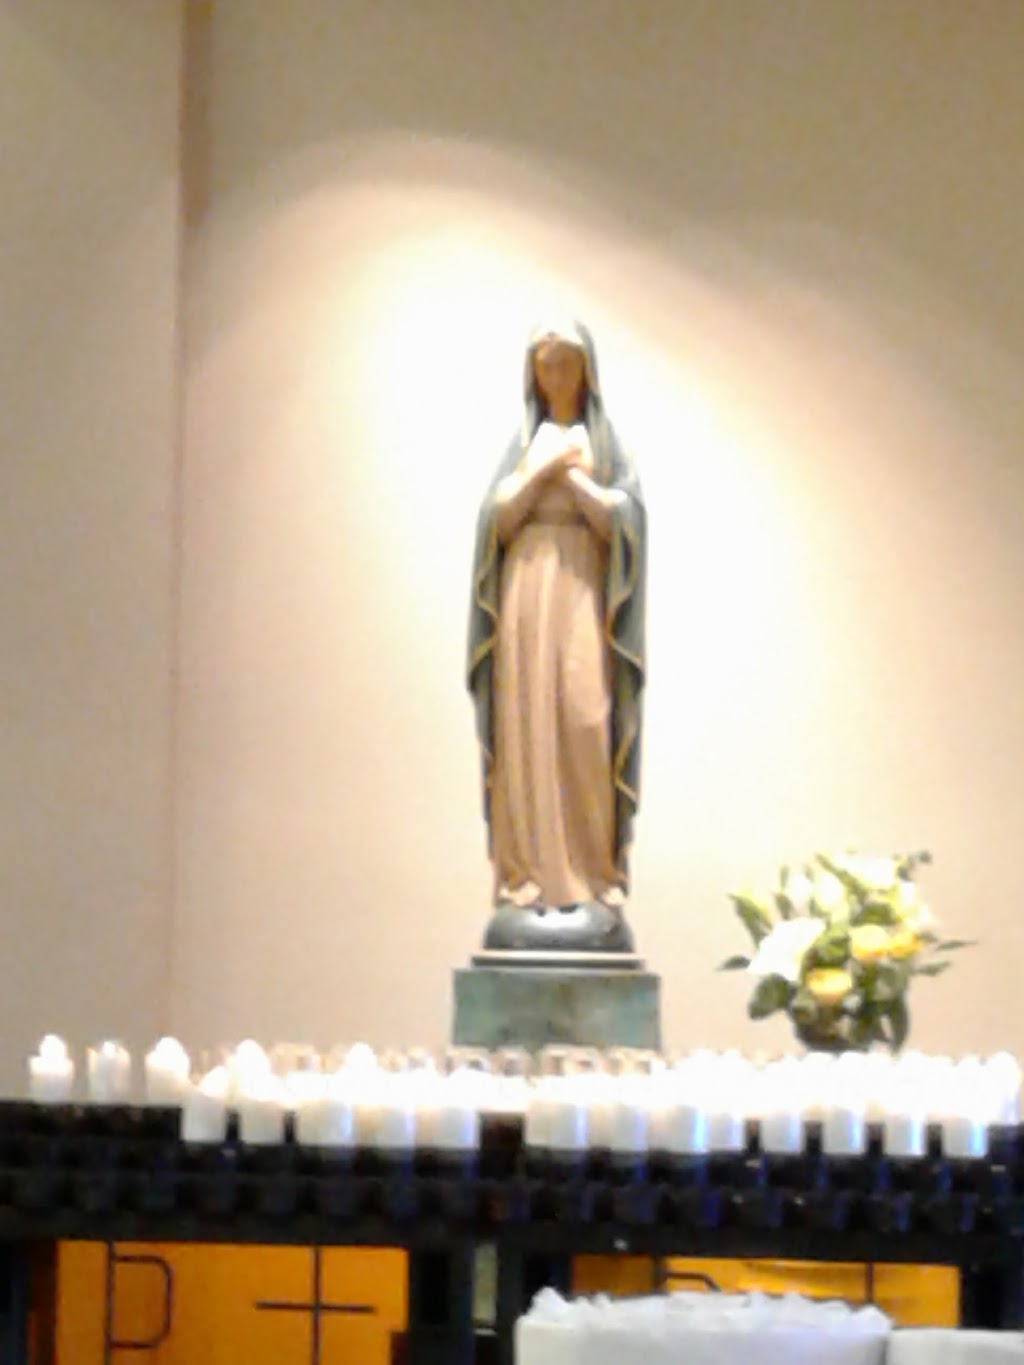 St Raphael Korean Catholic Center | 12366 Rosecrans Ave, Norwalk, CA 90650 | Phone: (562) 623-0700